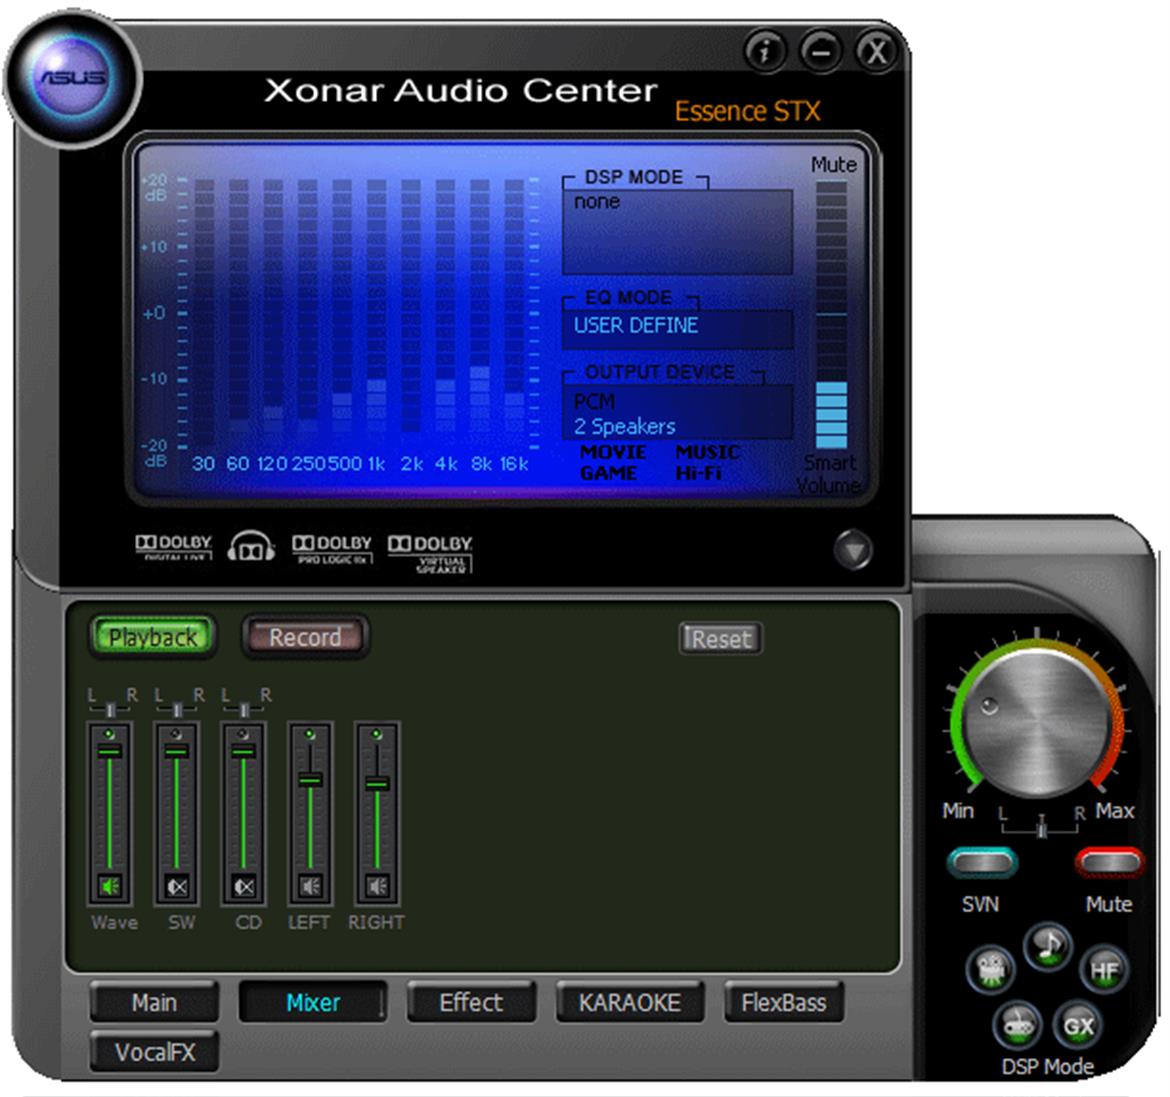 ASUS XONAR Essence STX PCIe Audio Card